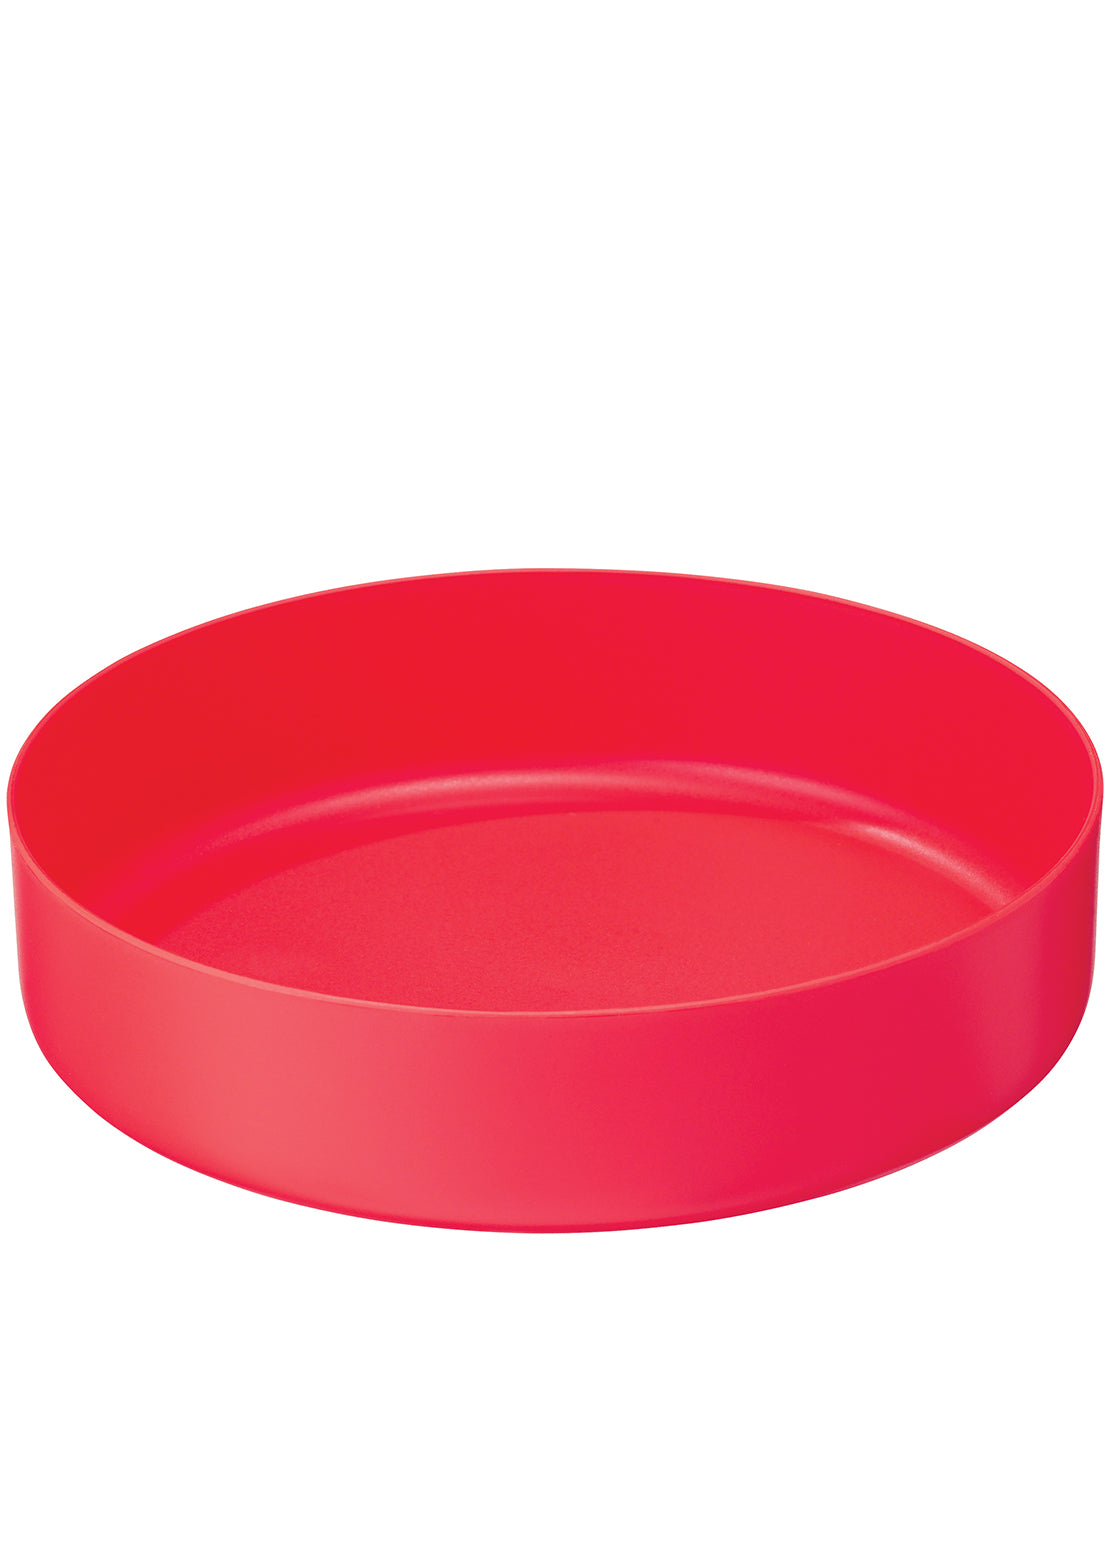 MSR Deep Dish Plate - Small Red